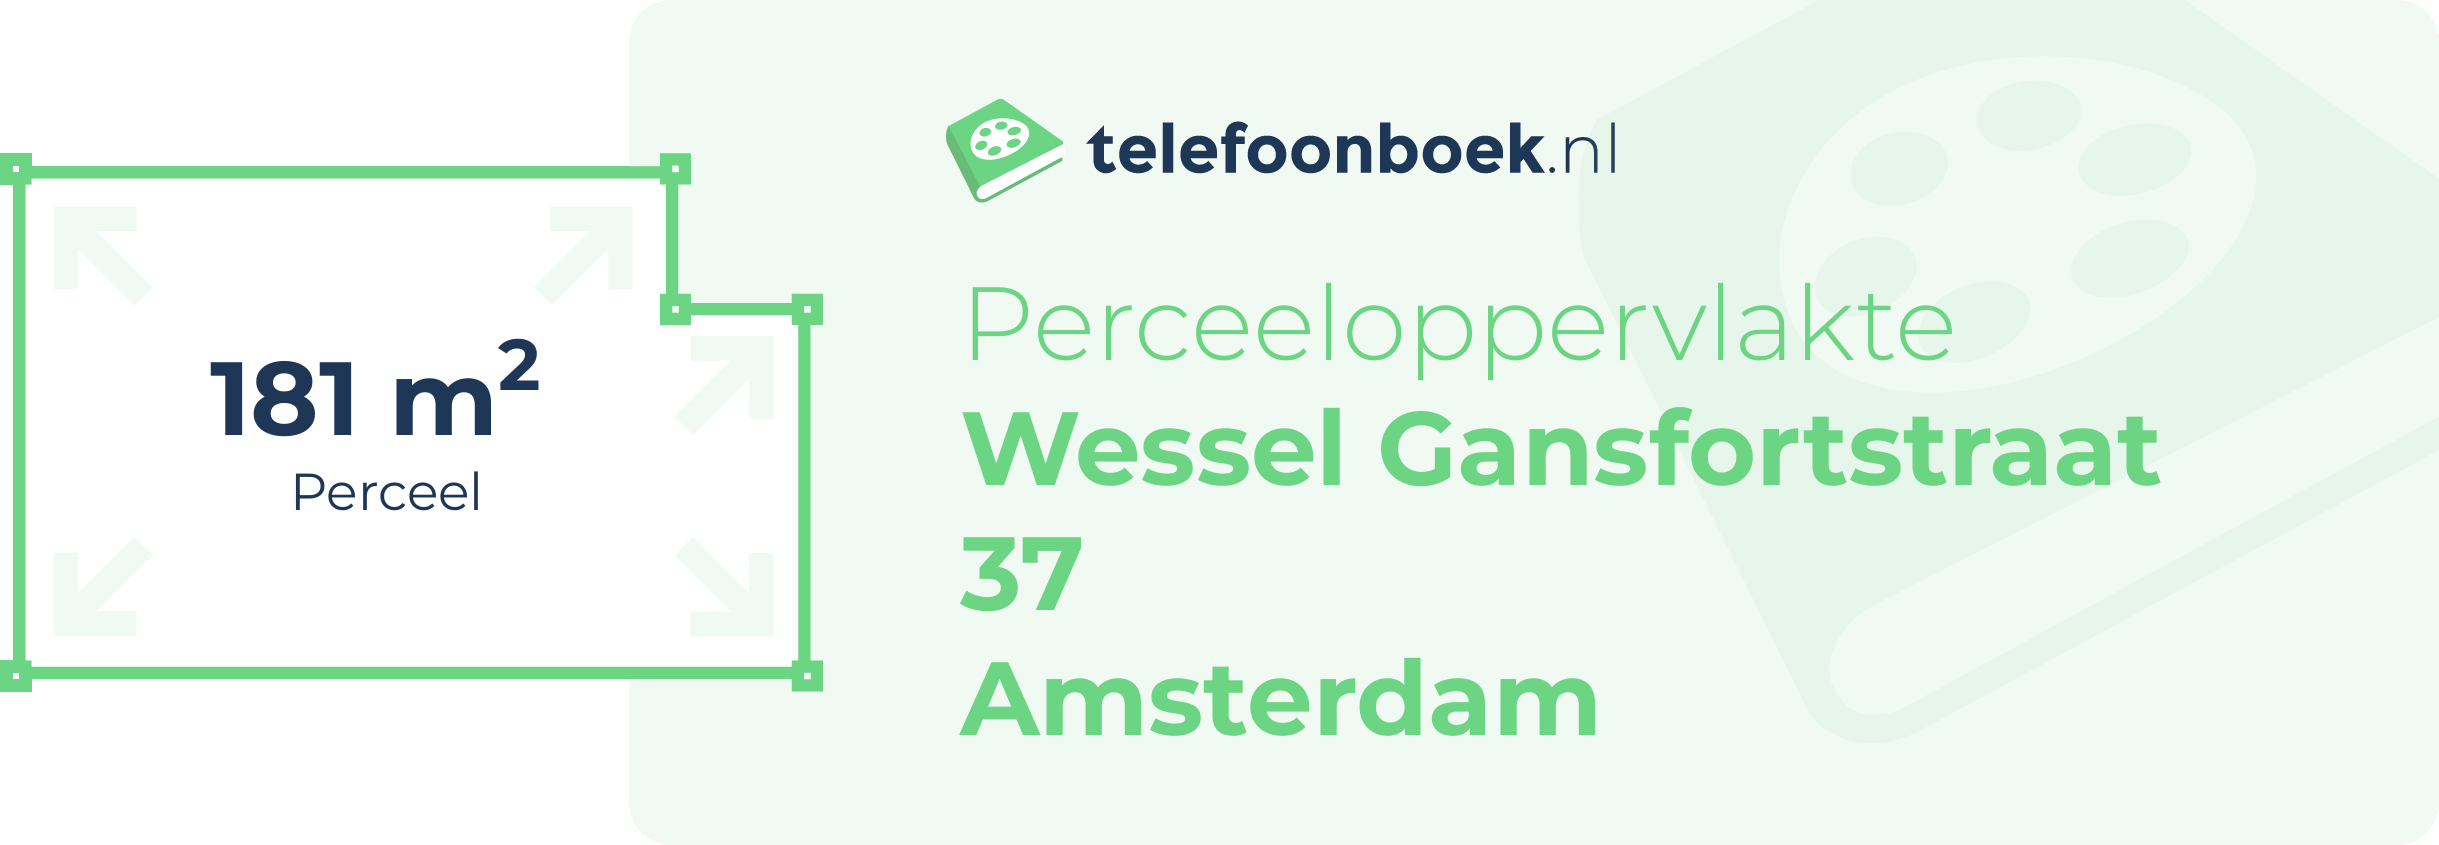 Perceeloppervlakte Wessel Gansfortstraat 37 Amsterdam